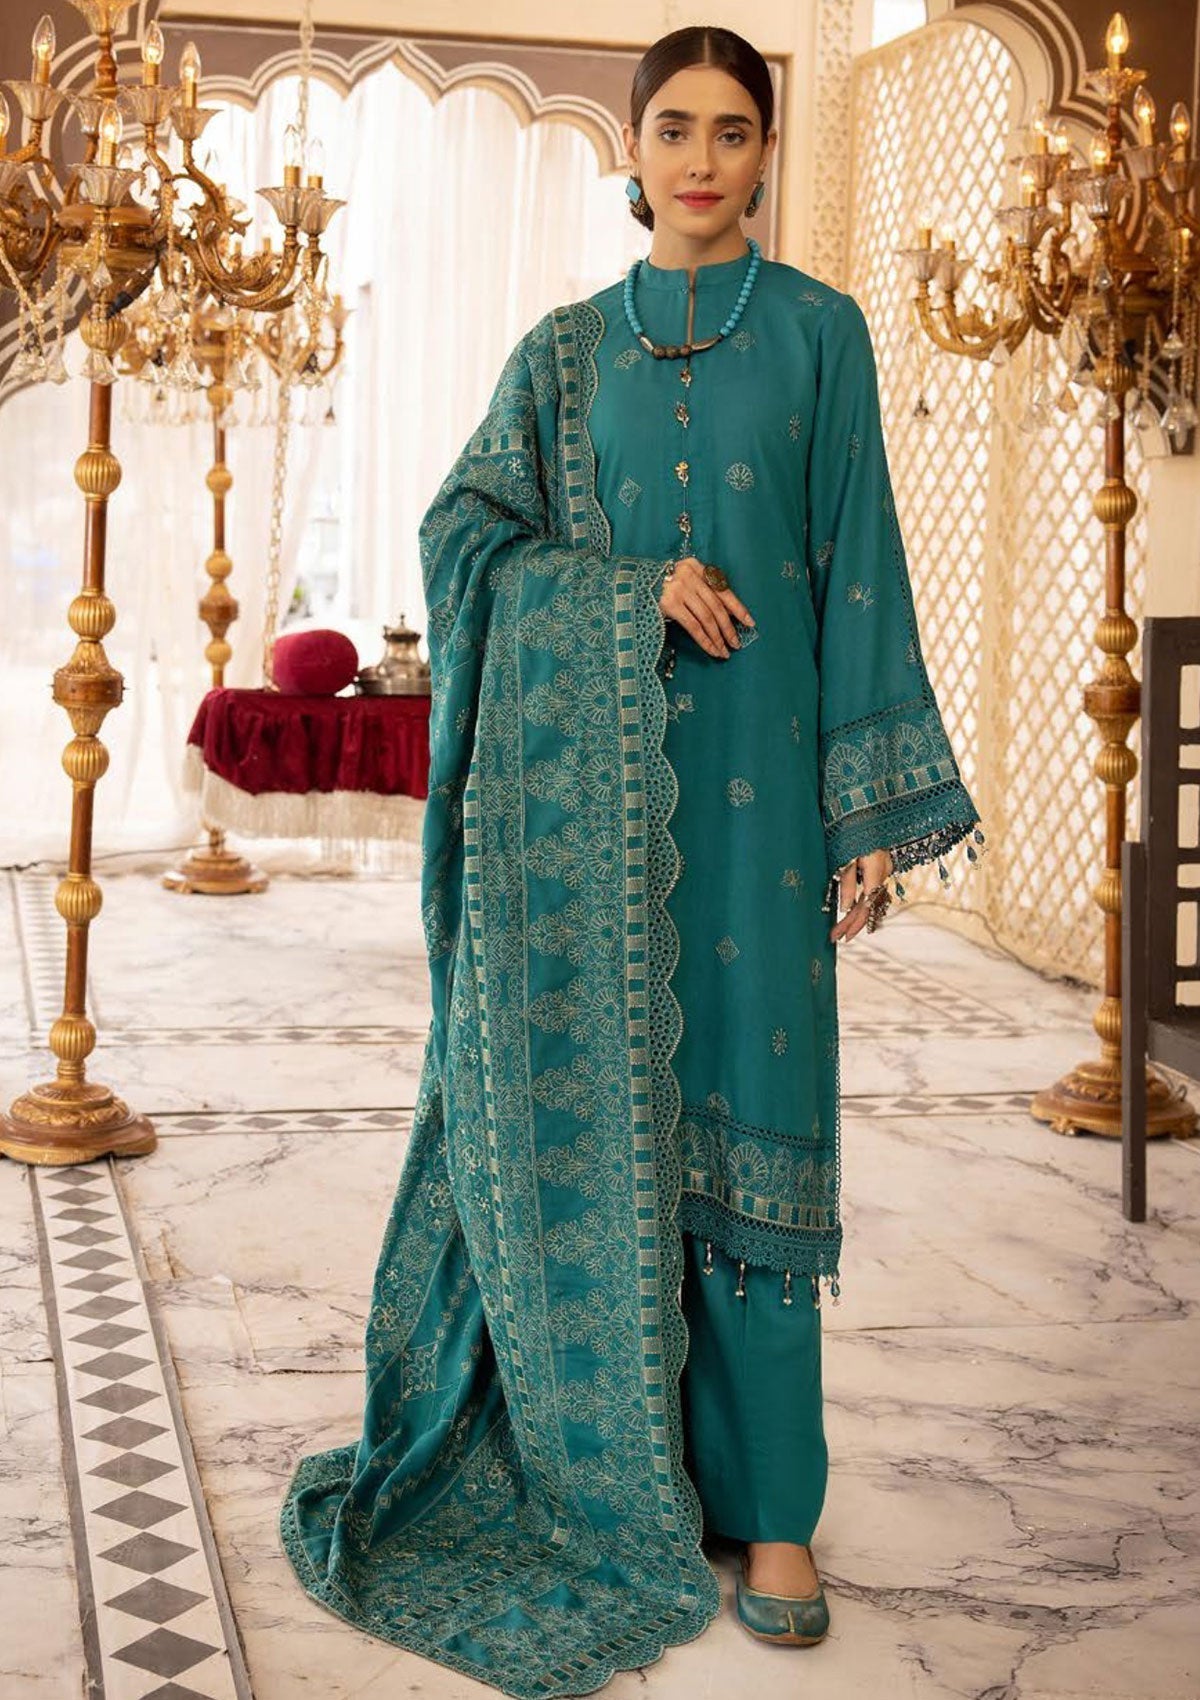 Winter Collection - Shaista - Khoobseerat - Karandi - SKK#368 available at Saleem Fabrics Traditions